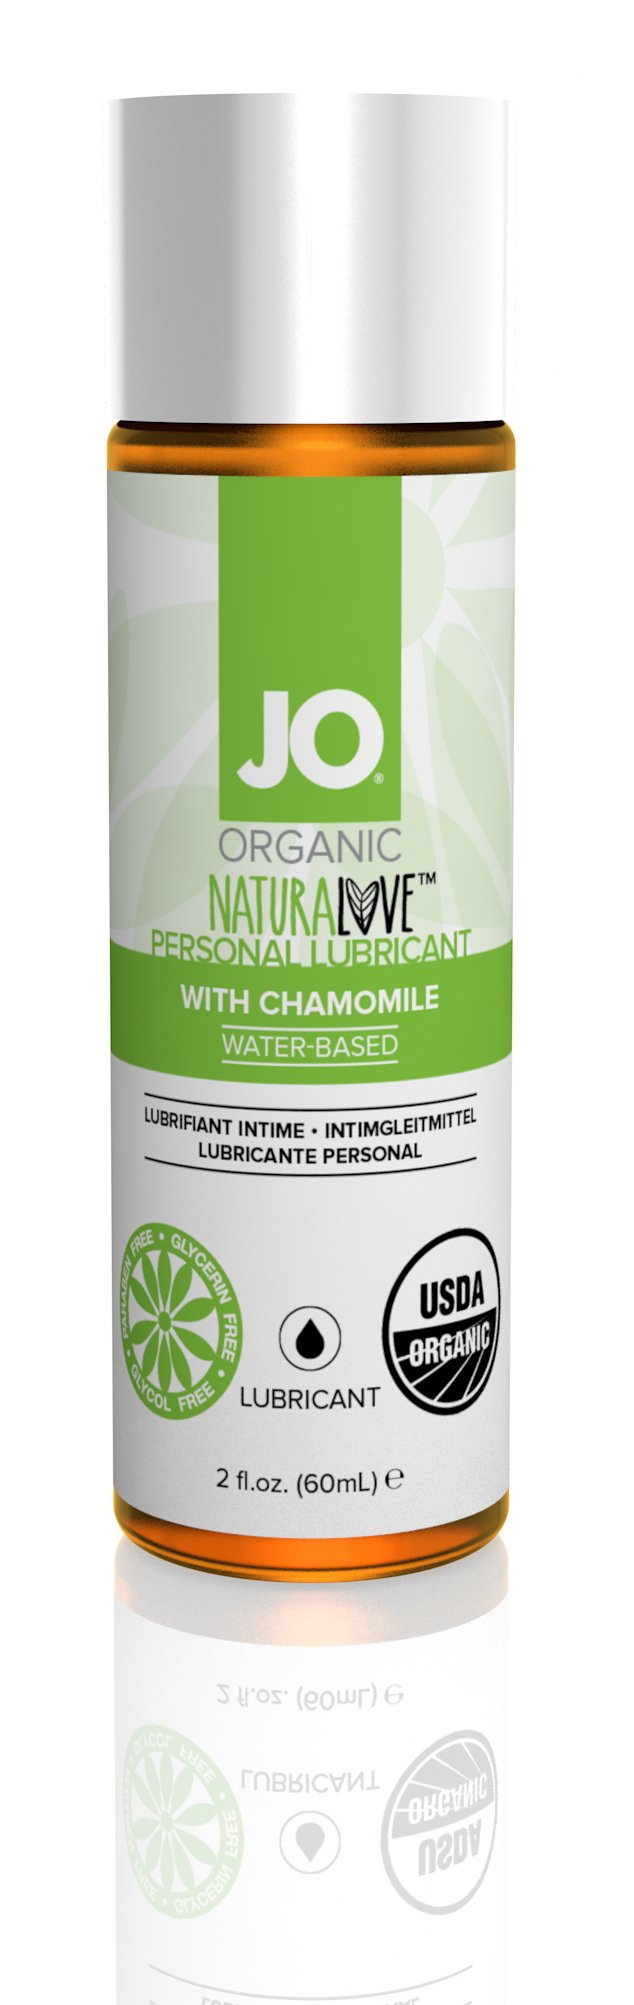 JO USDA Organic Lubricant 2 Oz / 60 ml